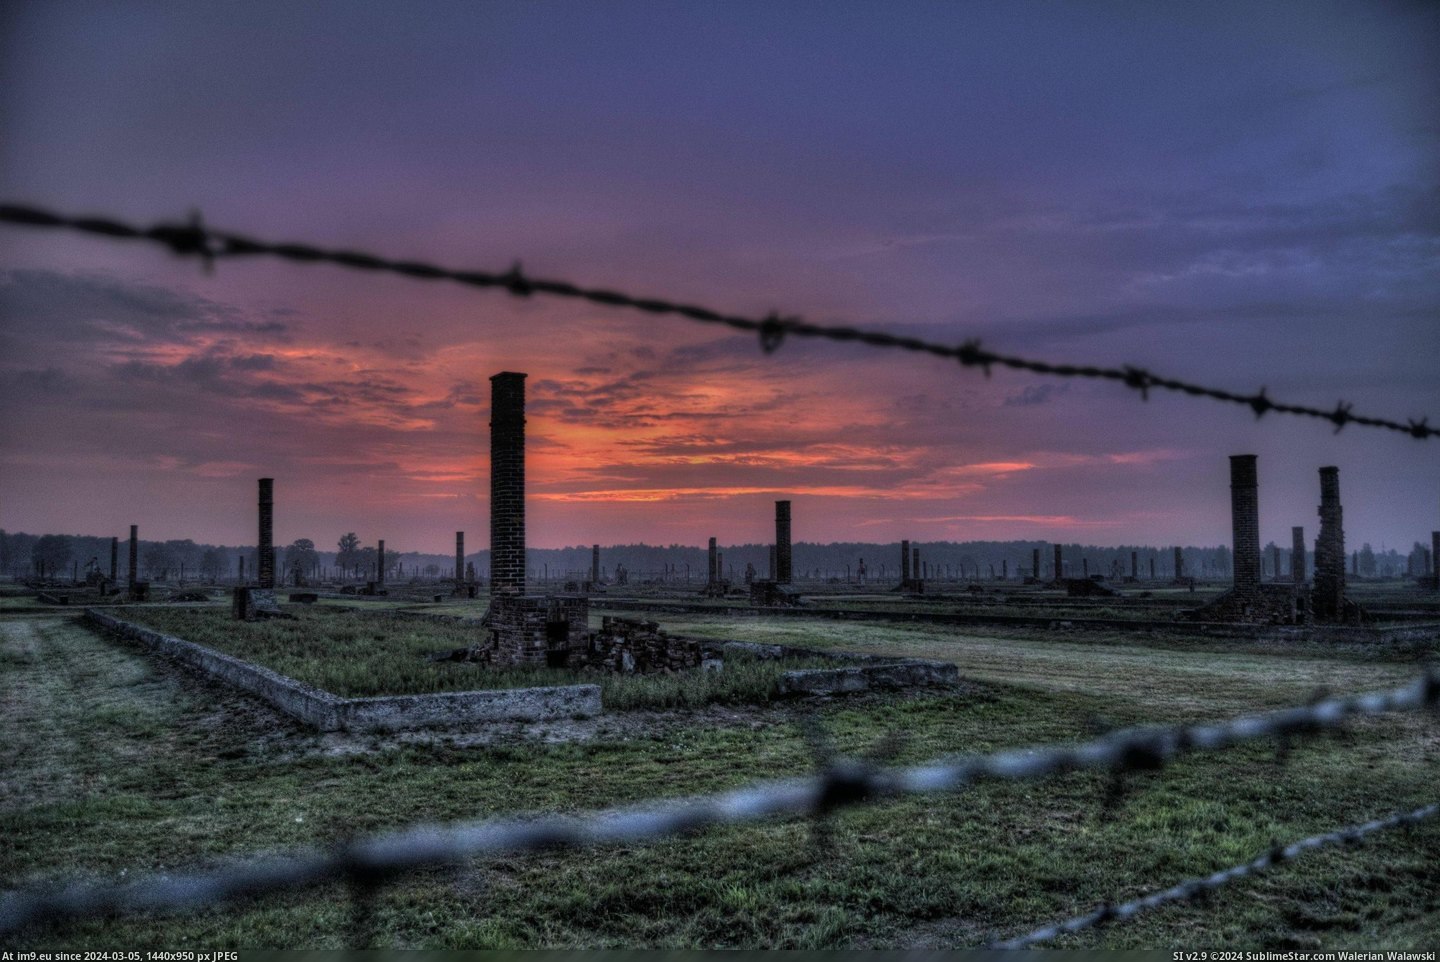  #Auschwitz  [Pics] Auschwitz. Pic. (Изображение из альбом My r/PICS favs))